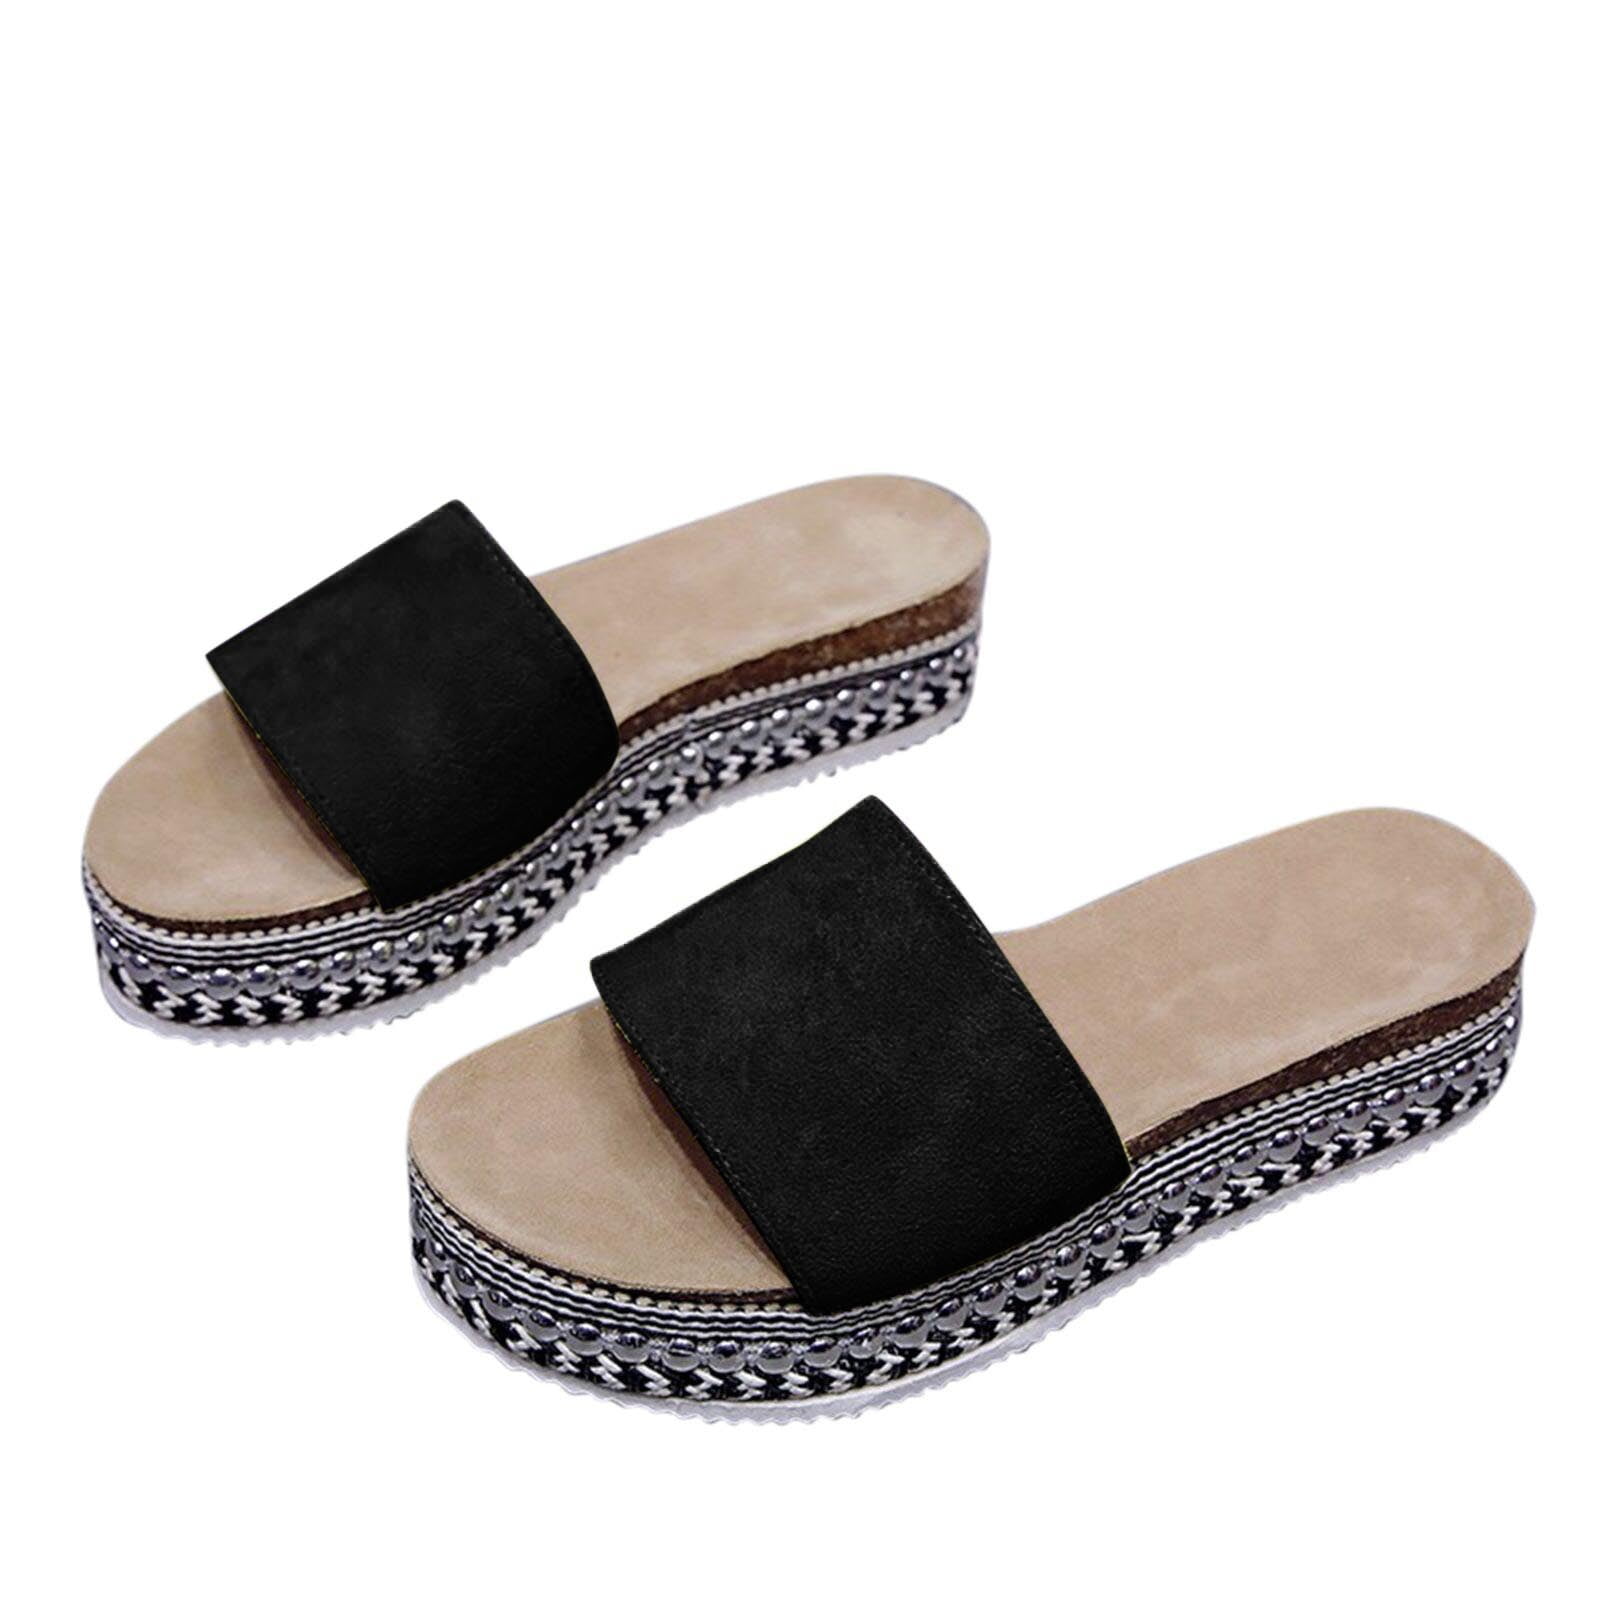 Vedolay Shoes for Women Women's Slippers Memory Foam Anti Slip Home ...